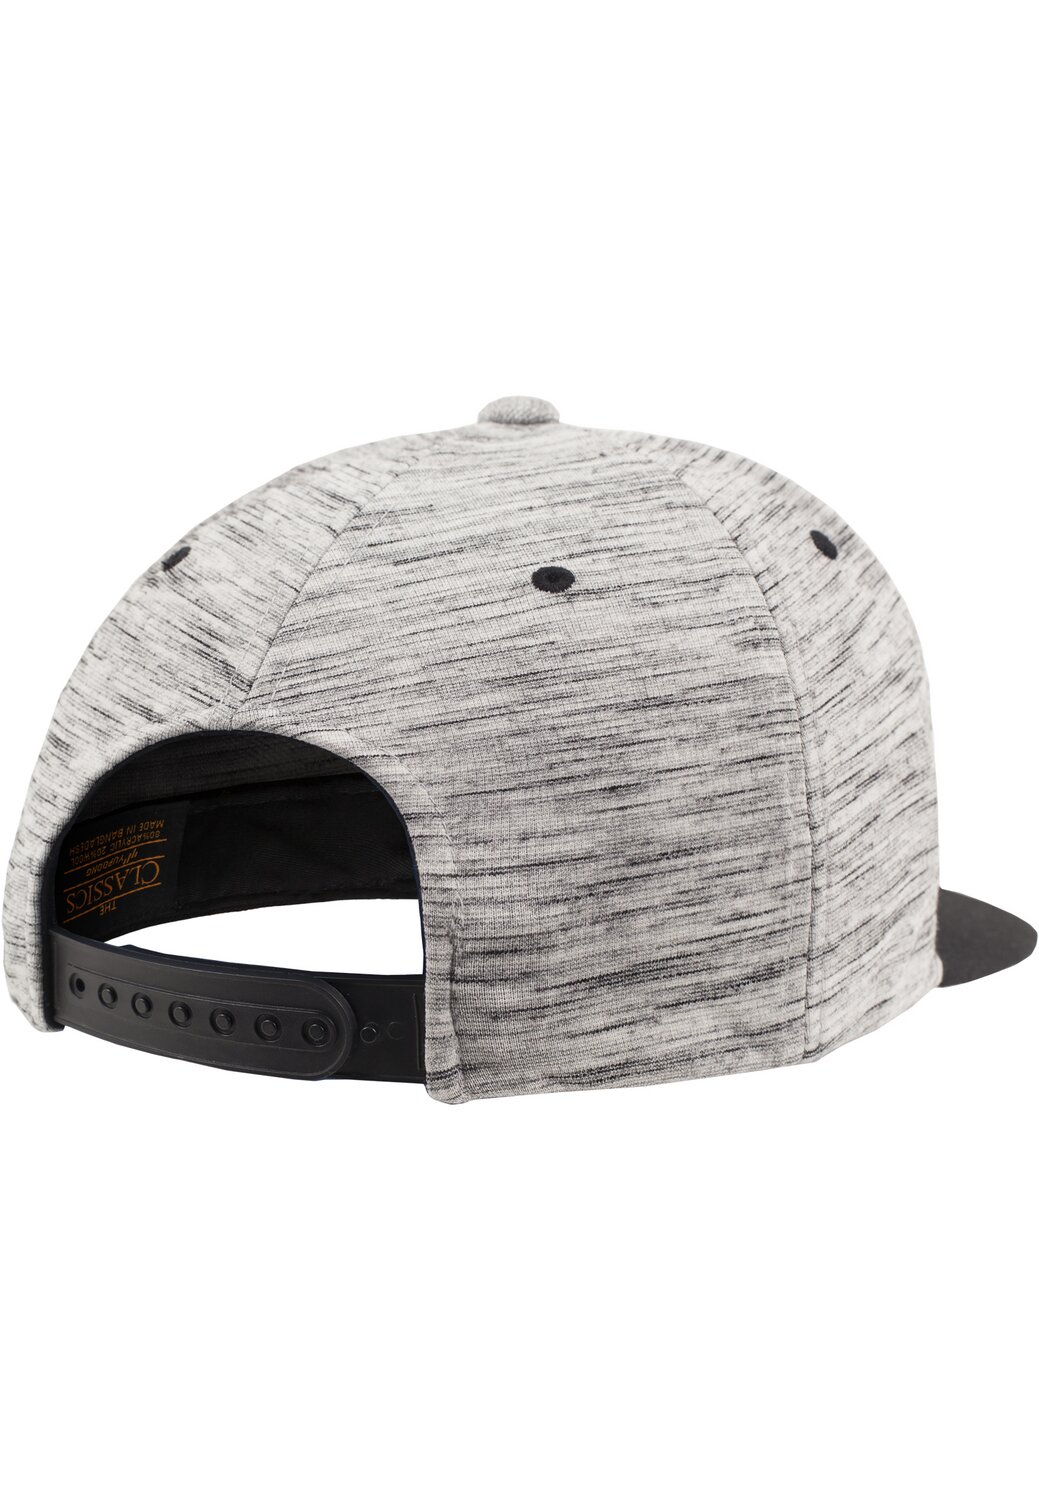 Snapback Cap Stripes Melange Crown Flexfit black/grey | MAXISCOOT